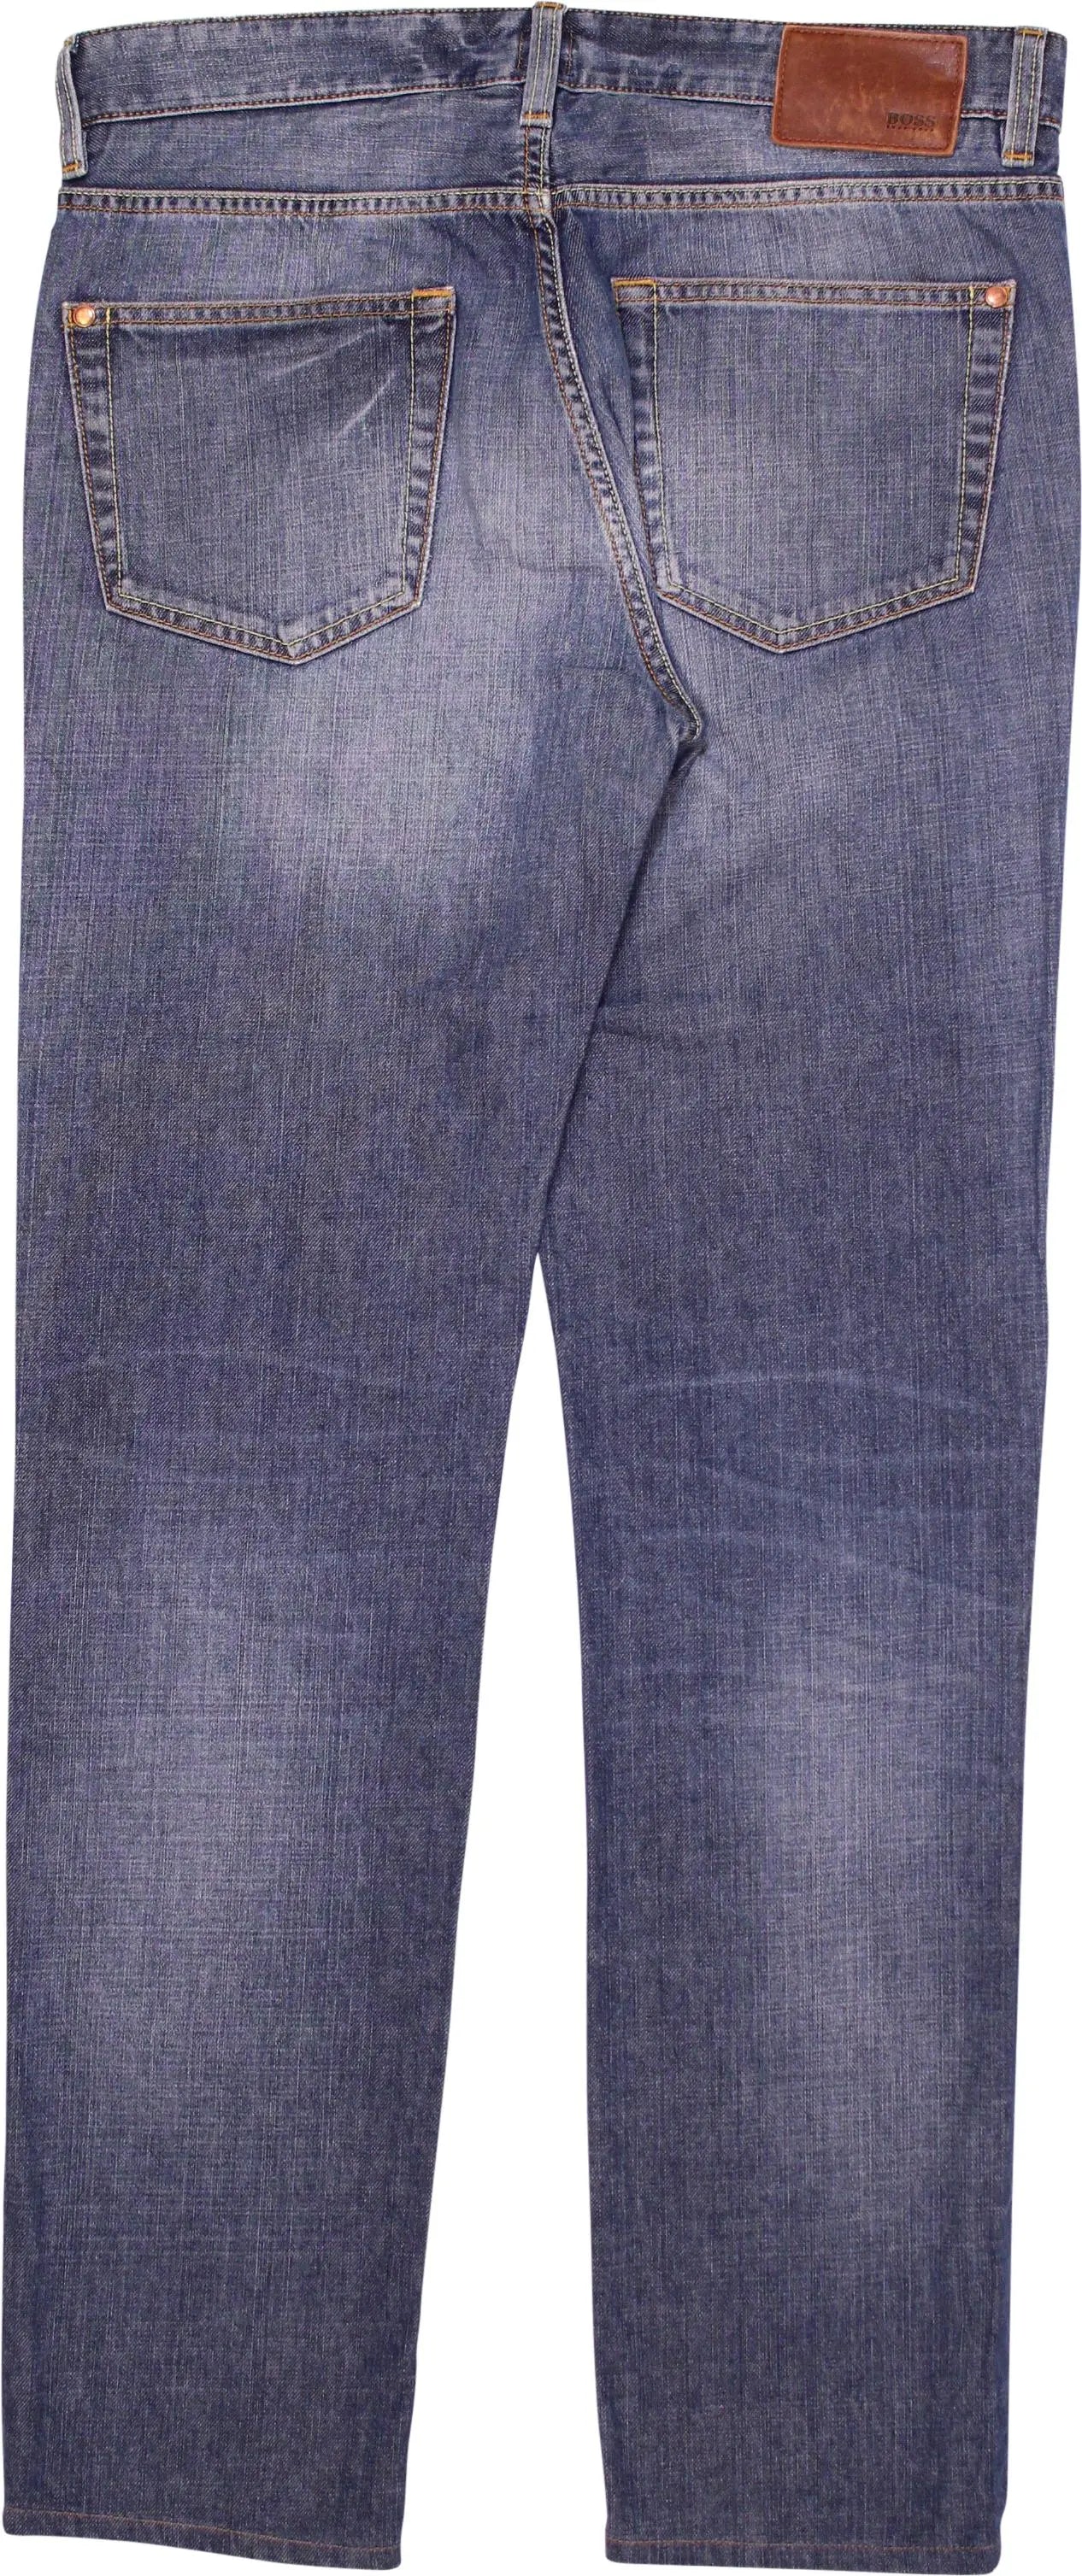 Hugo Boss - Hugo Boss Kansas Regular Fit Jeans- ThriftTale.com - Vintage and second handclothing